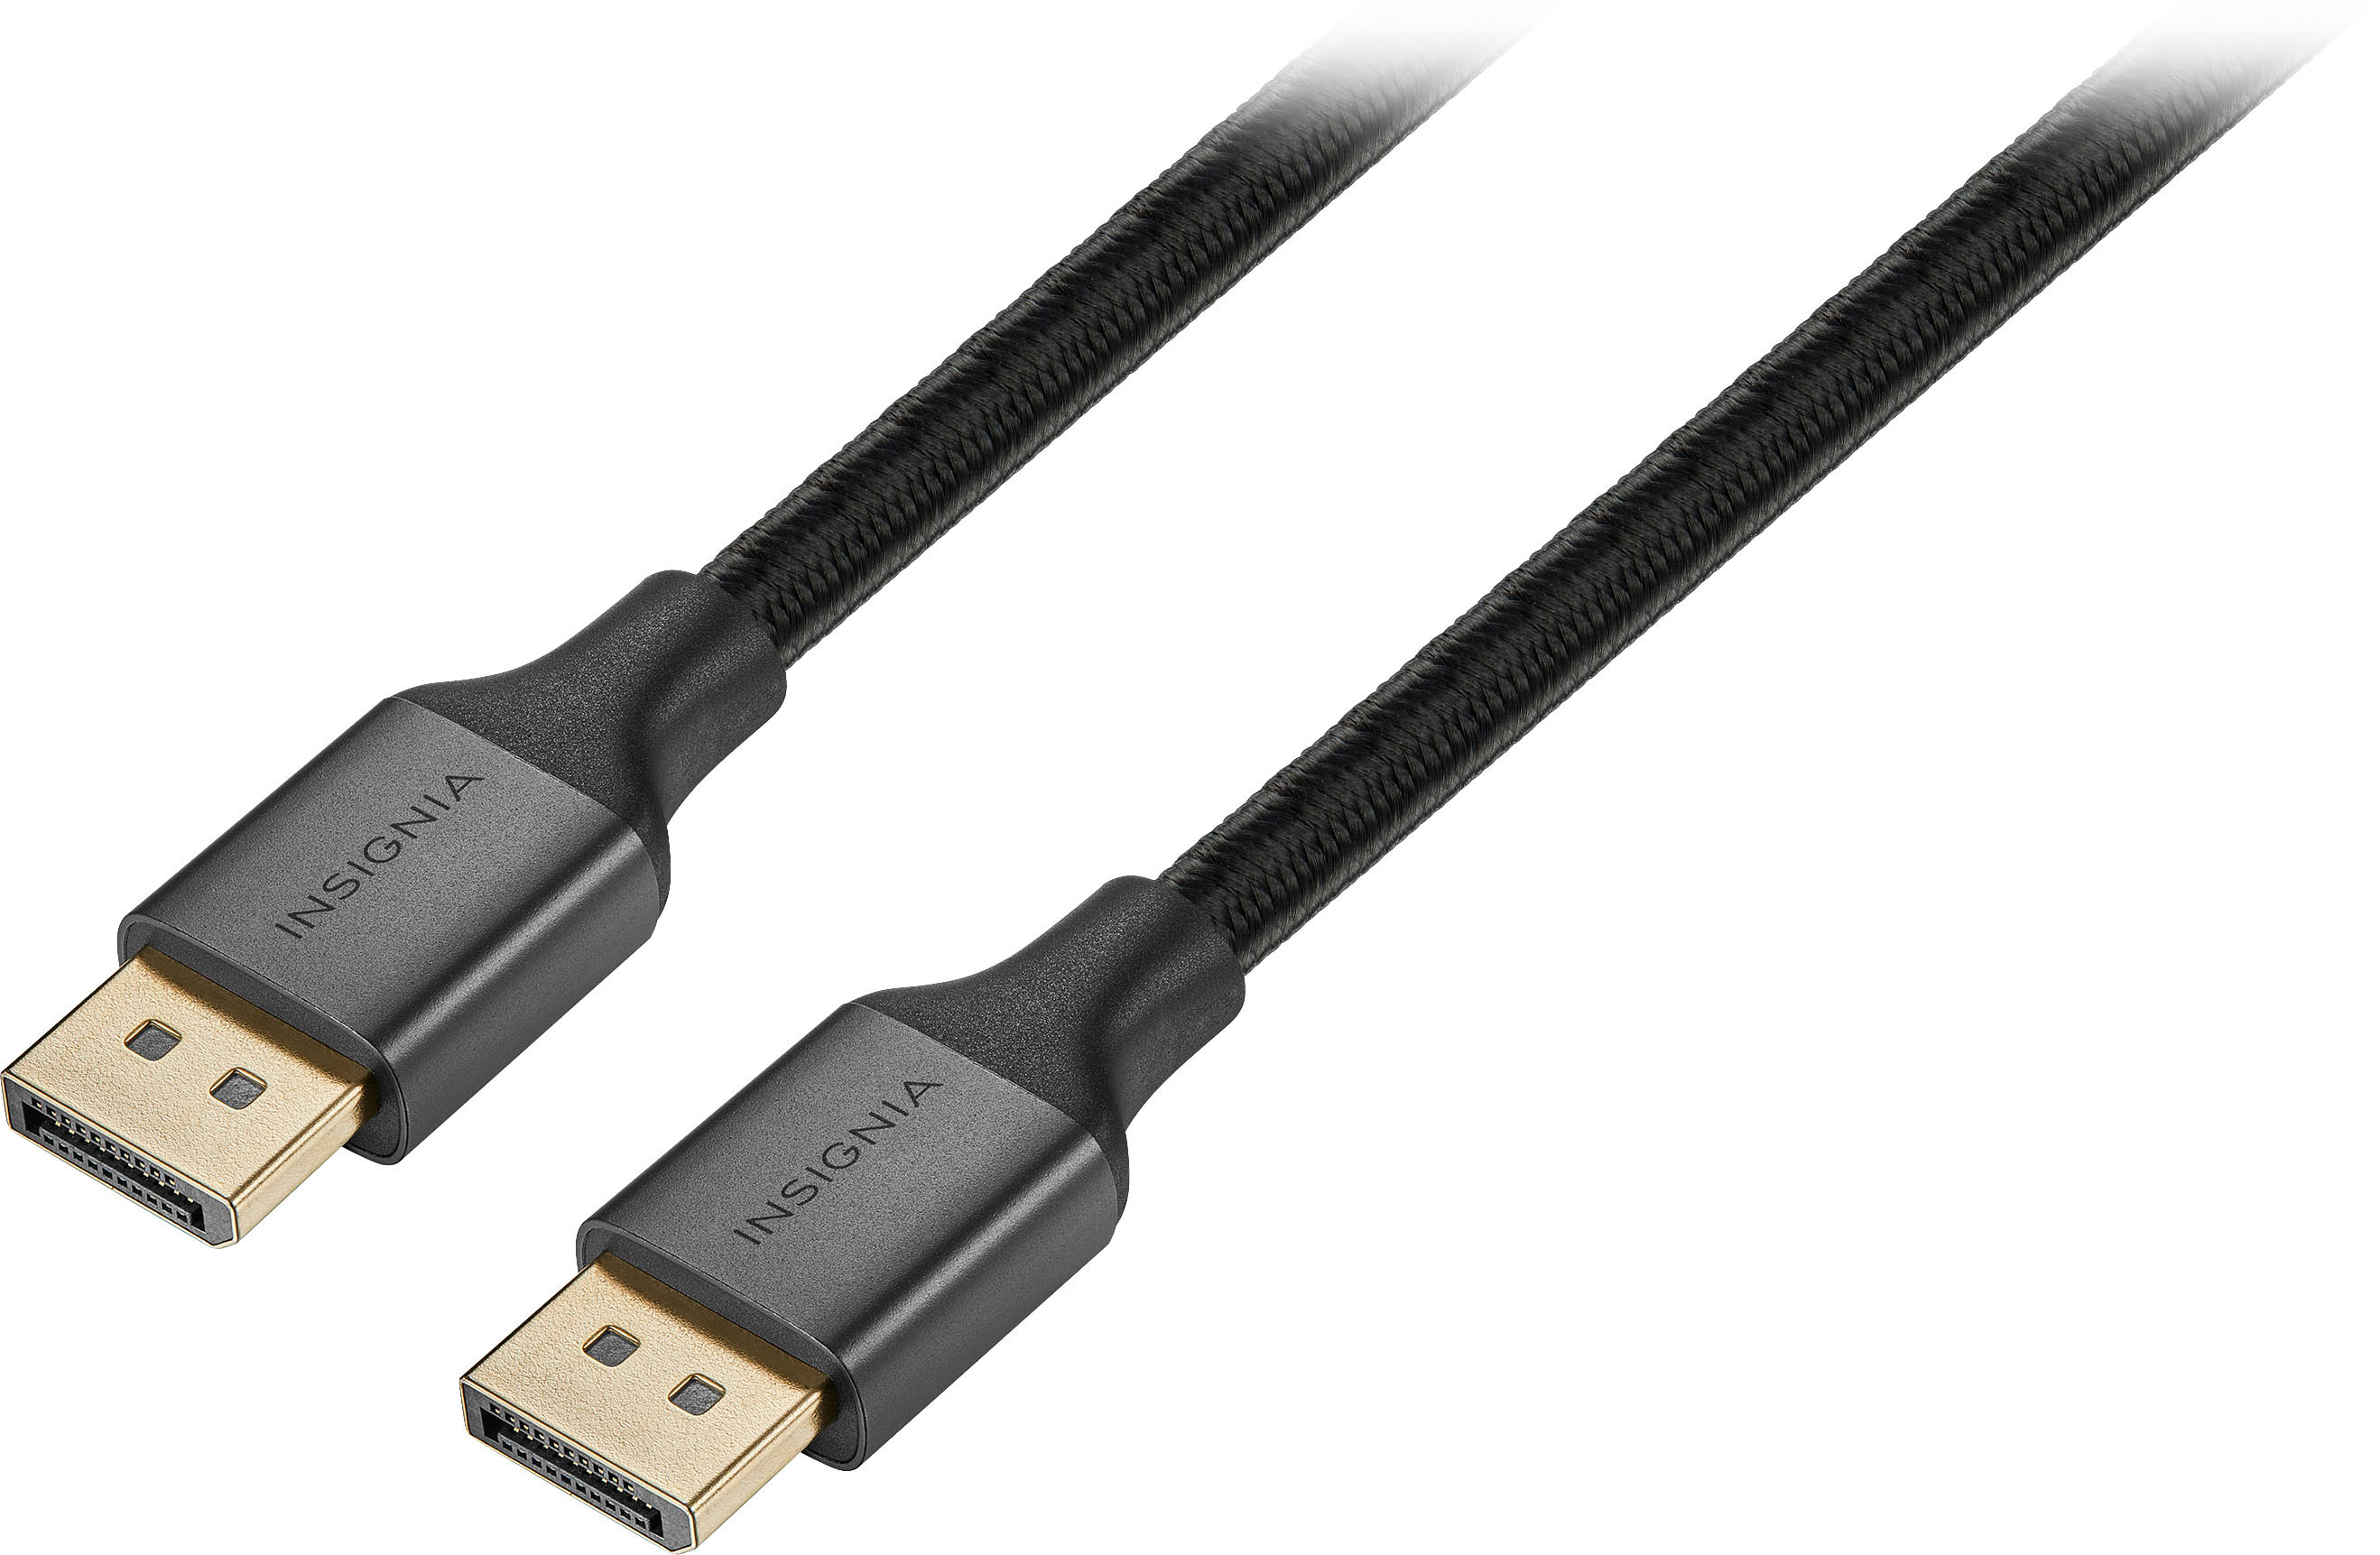 Cable DisplayPort 1.2 Monoprice Select Series - 1 - MCI Electronics